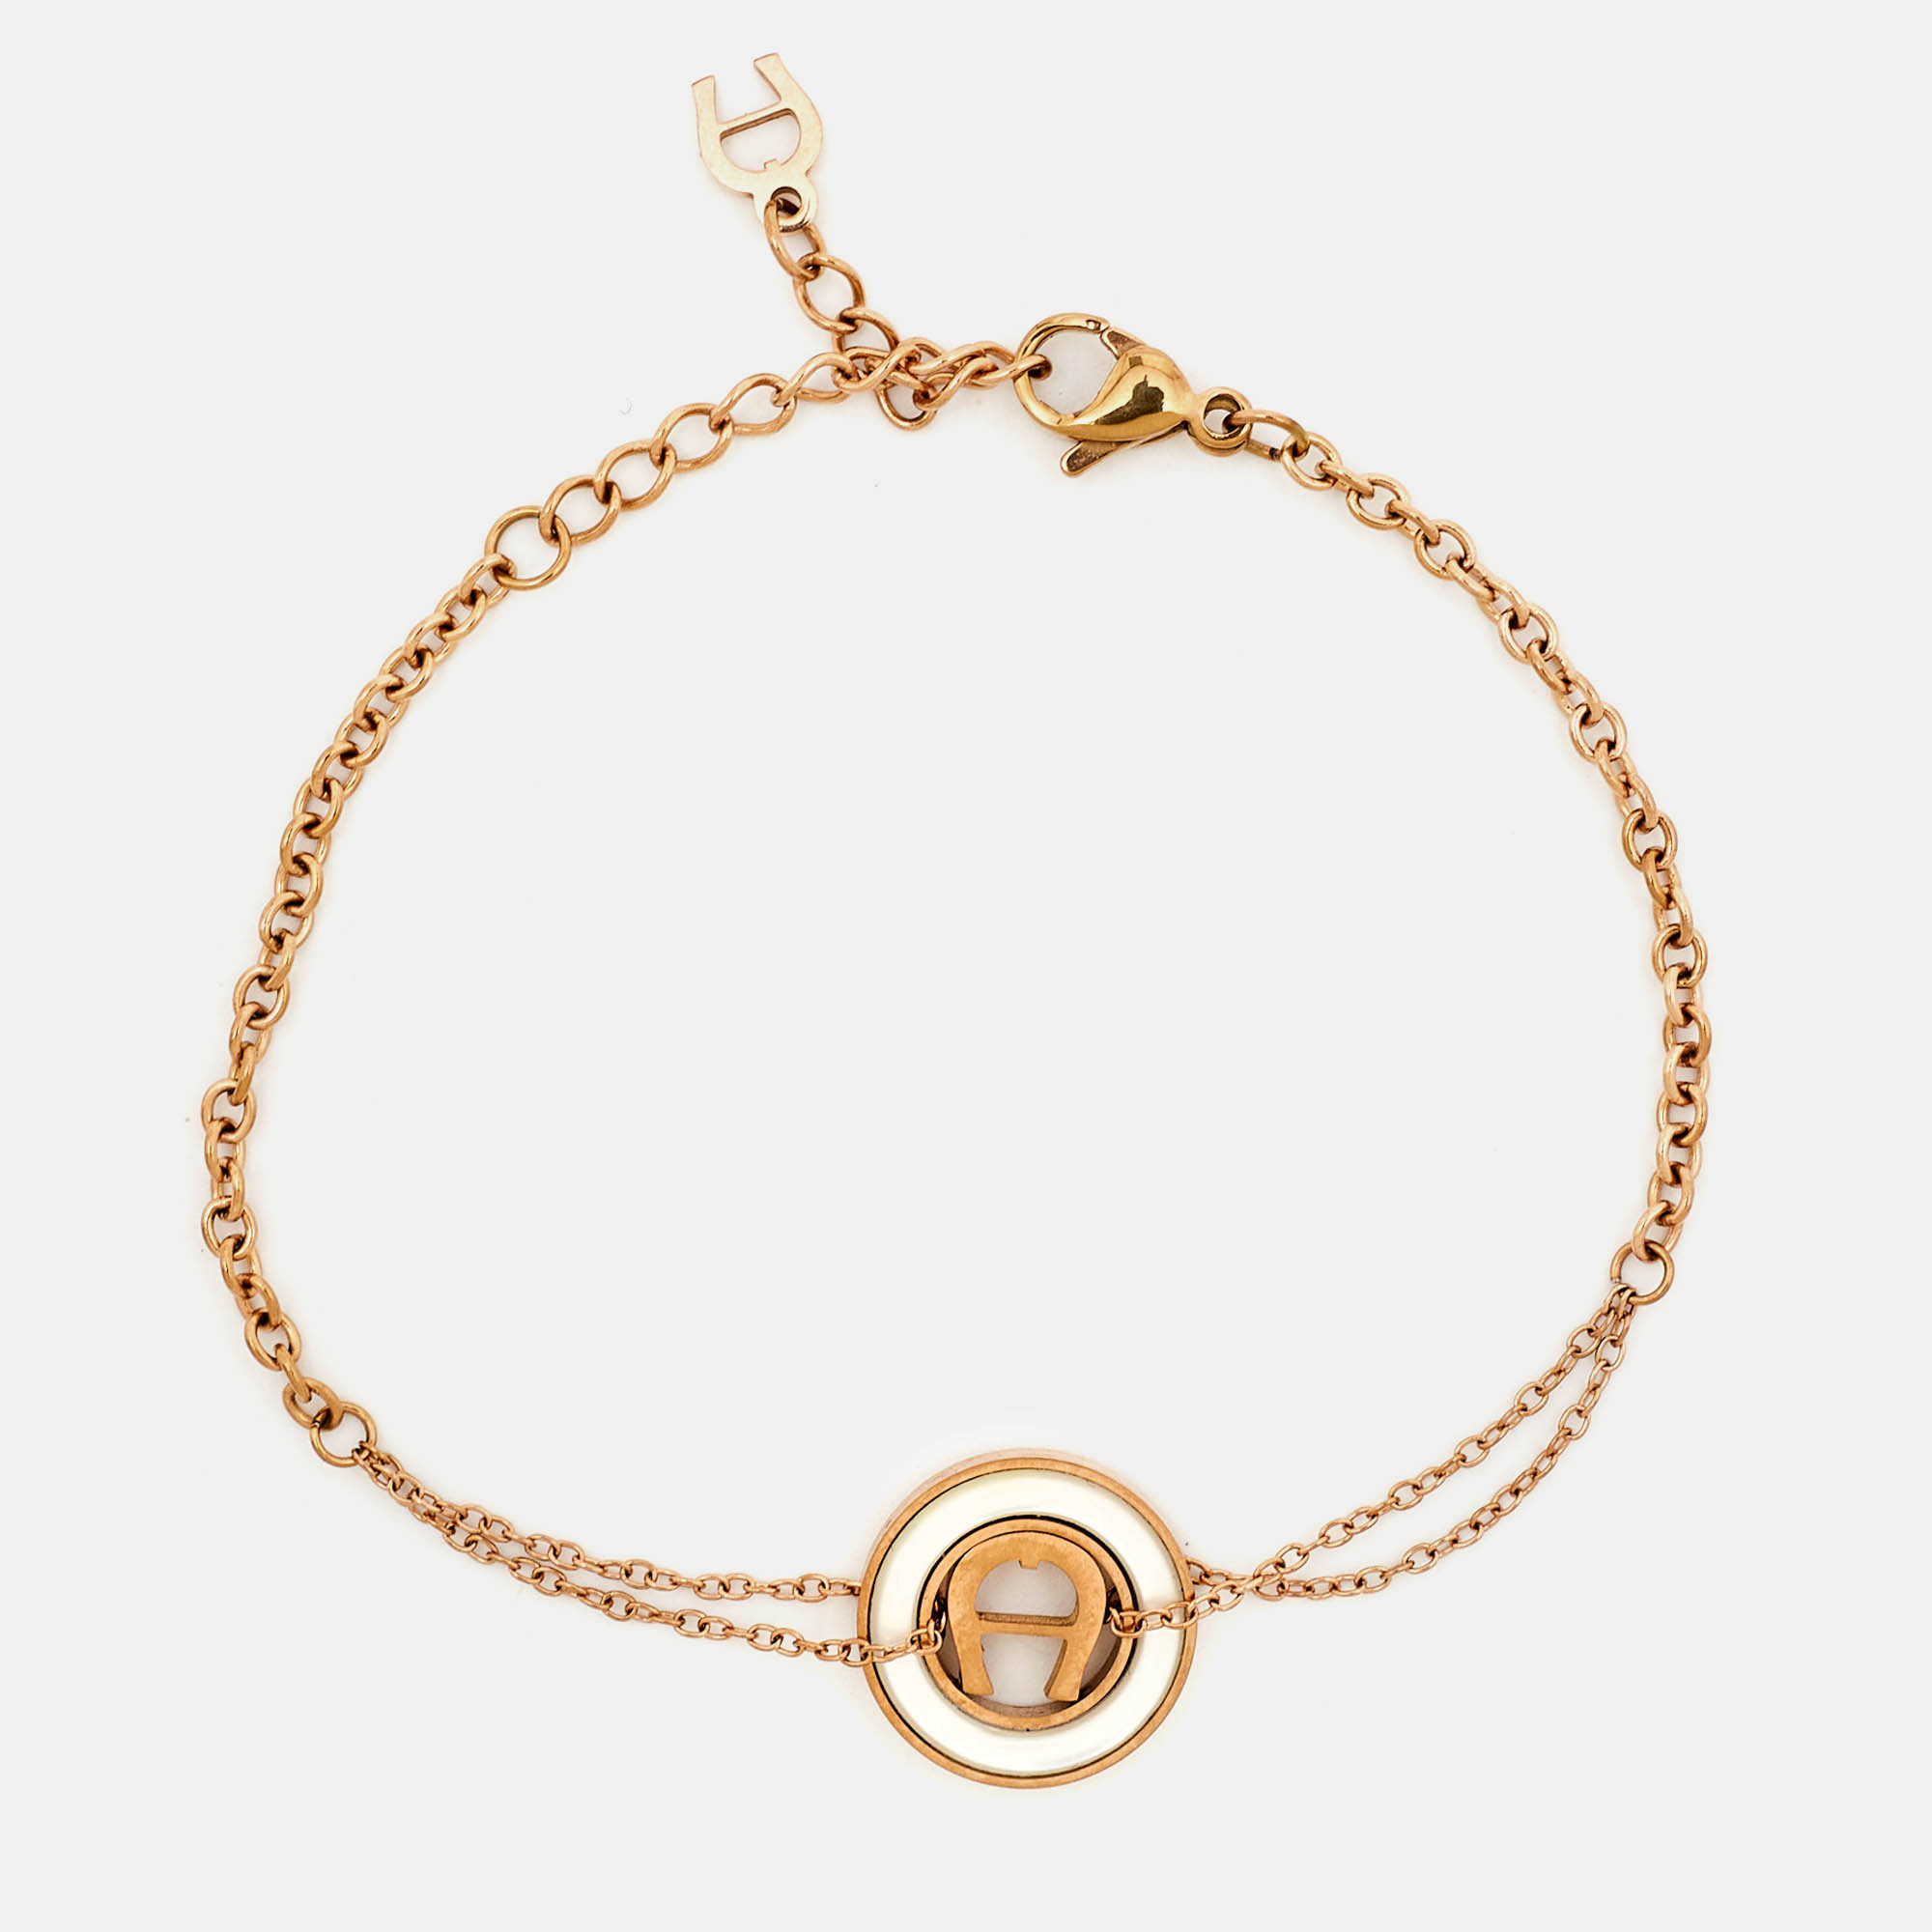 Aigner bella mother of pearl gold tone bracelet